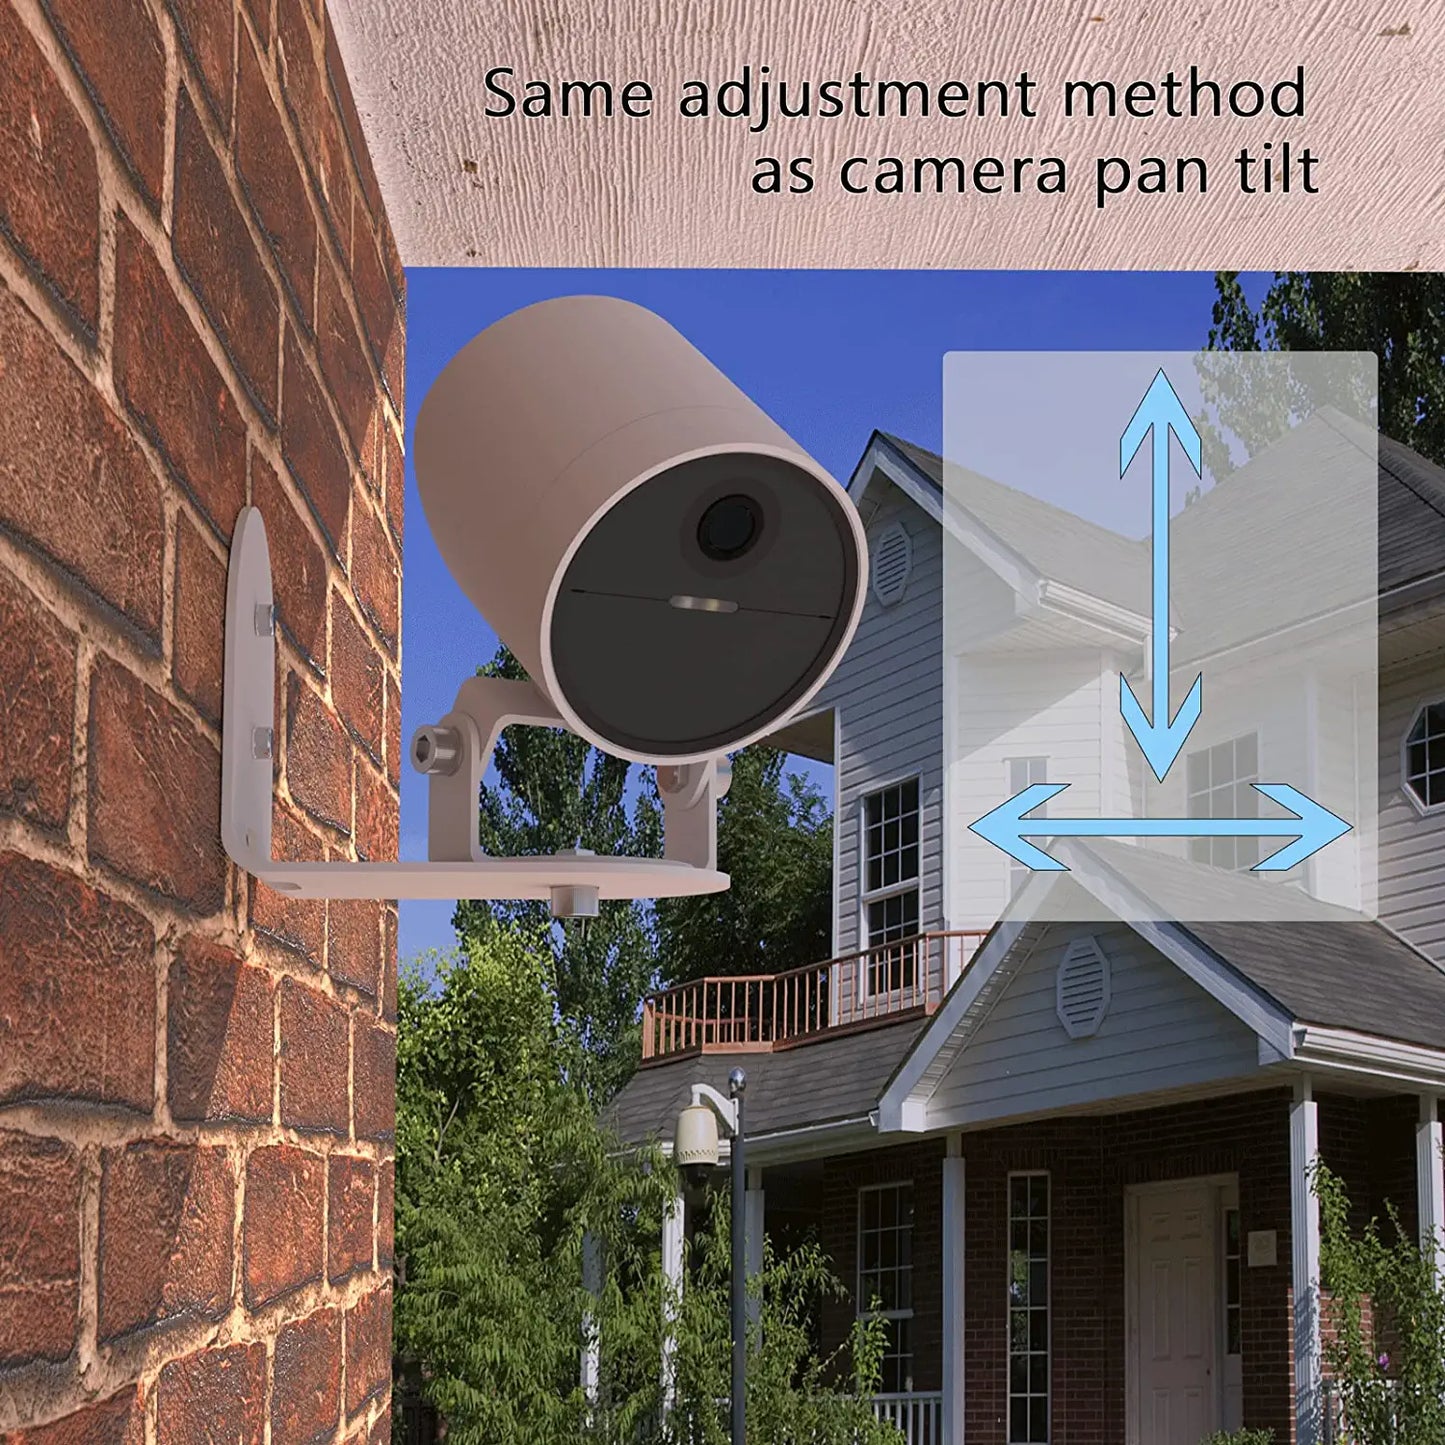 Metal Wall Mount for SimpliSafe Outdoor Camera, Anti-Drop, 360 Degree Adjustment Swivel Mount Bracket